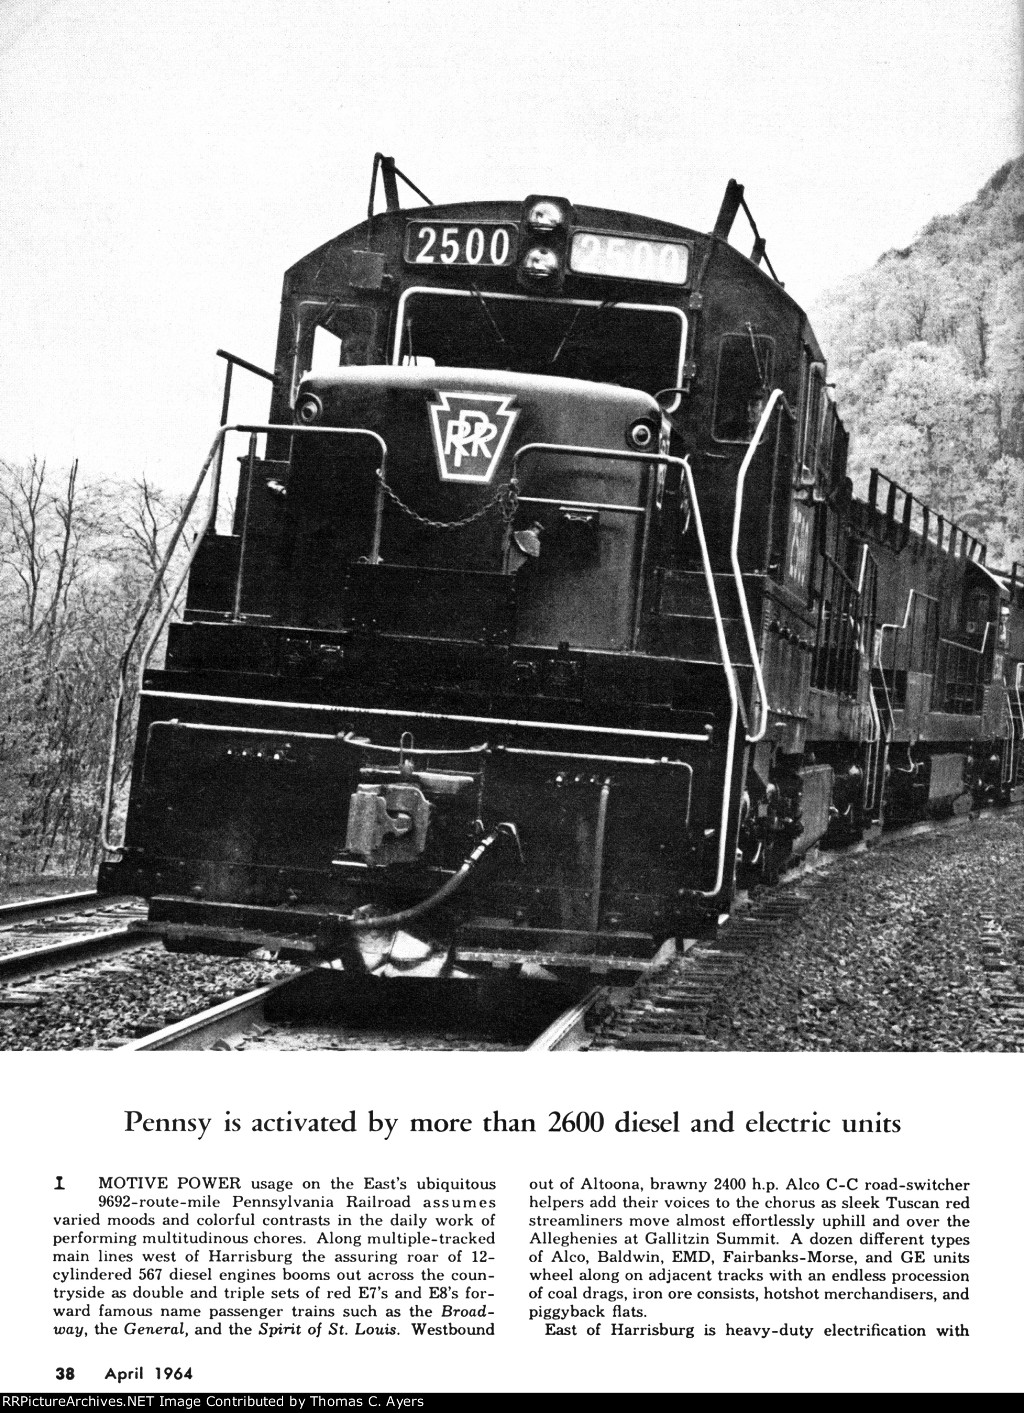 "Largest Locomotive Fleet," Page 38, 1964